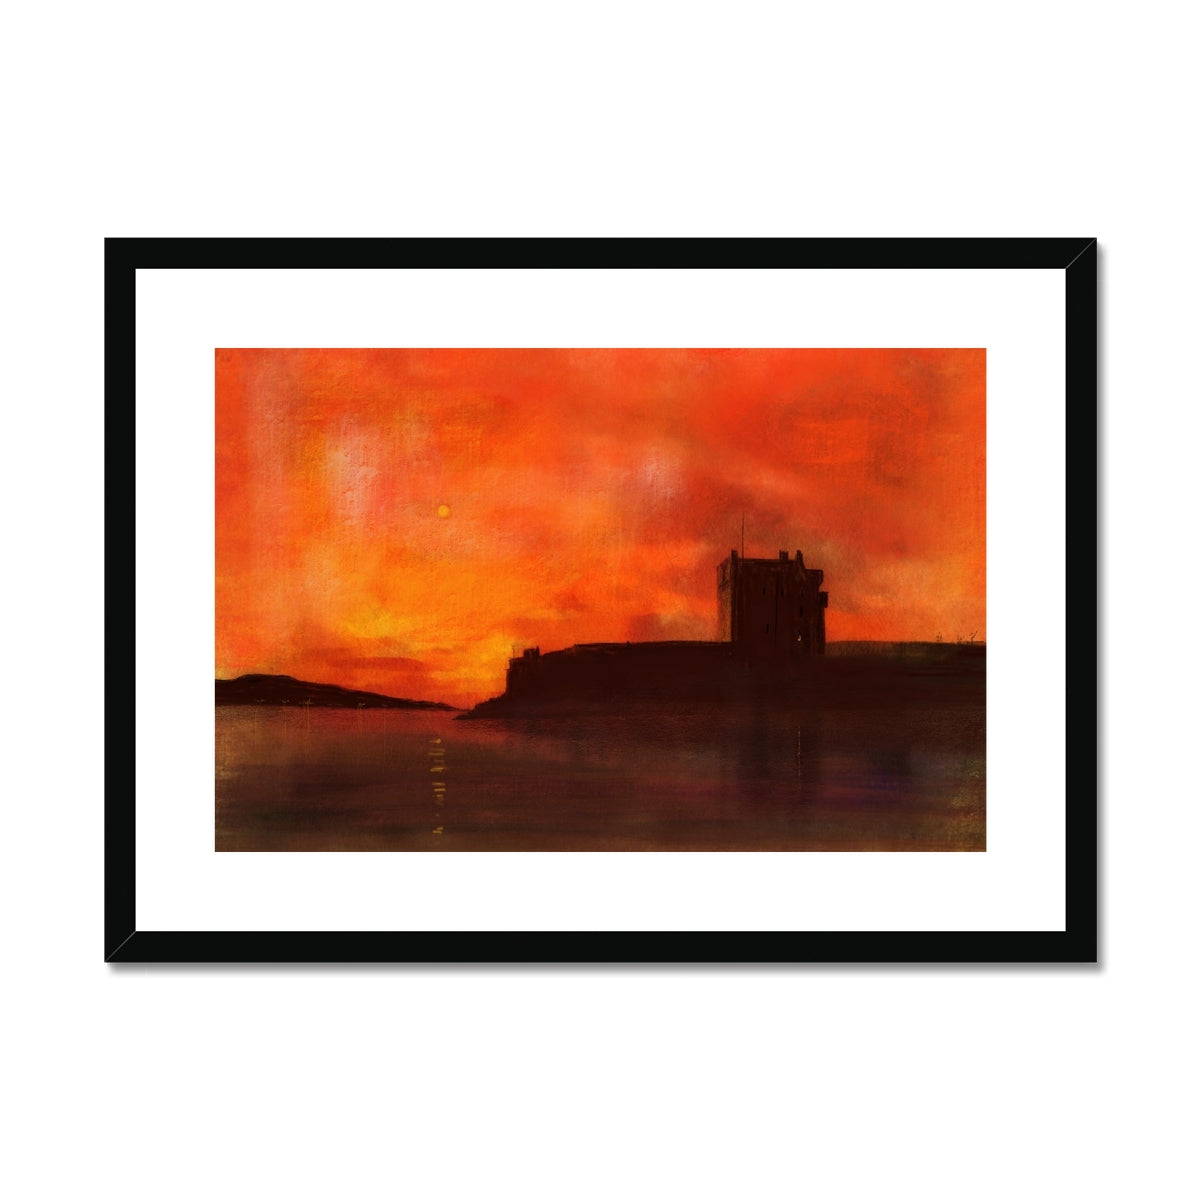 Broughty Castle Sunset Painting | Framed & Mounted Prints From Scotland-Framed & Mounted Prints-Scottish Castles Art Gallery-A2 Landscape-Black Frame-Paintings, Prints, Homeware, Art Gifts From Scotland By Scottish Artist Kevin Hunter